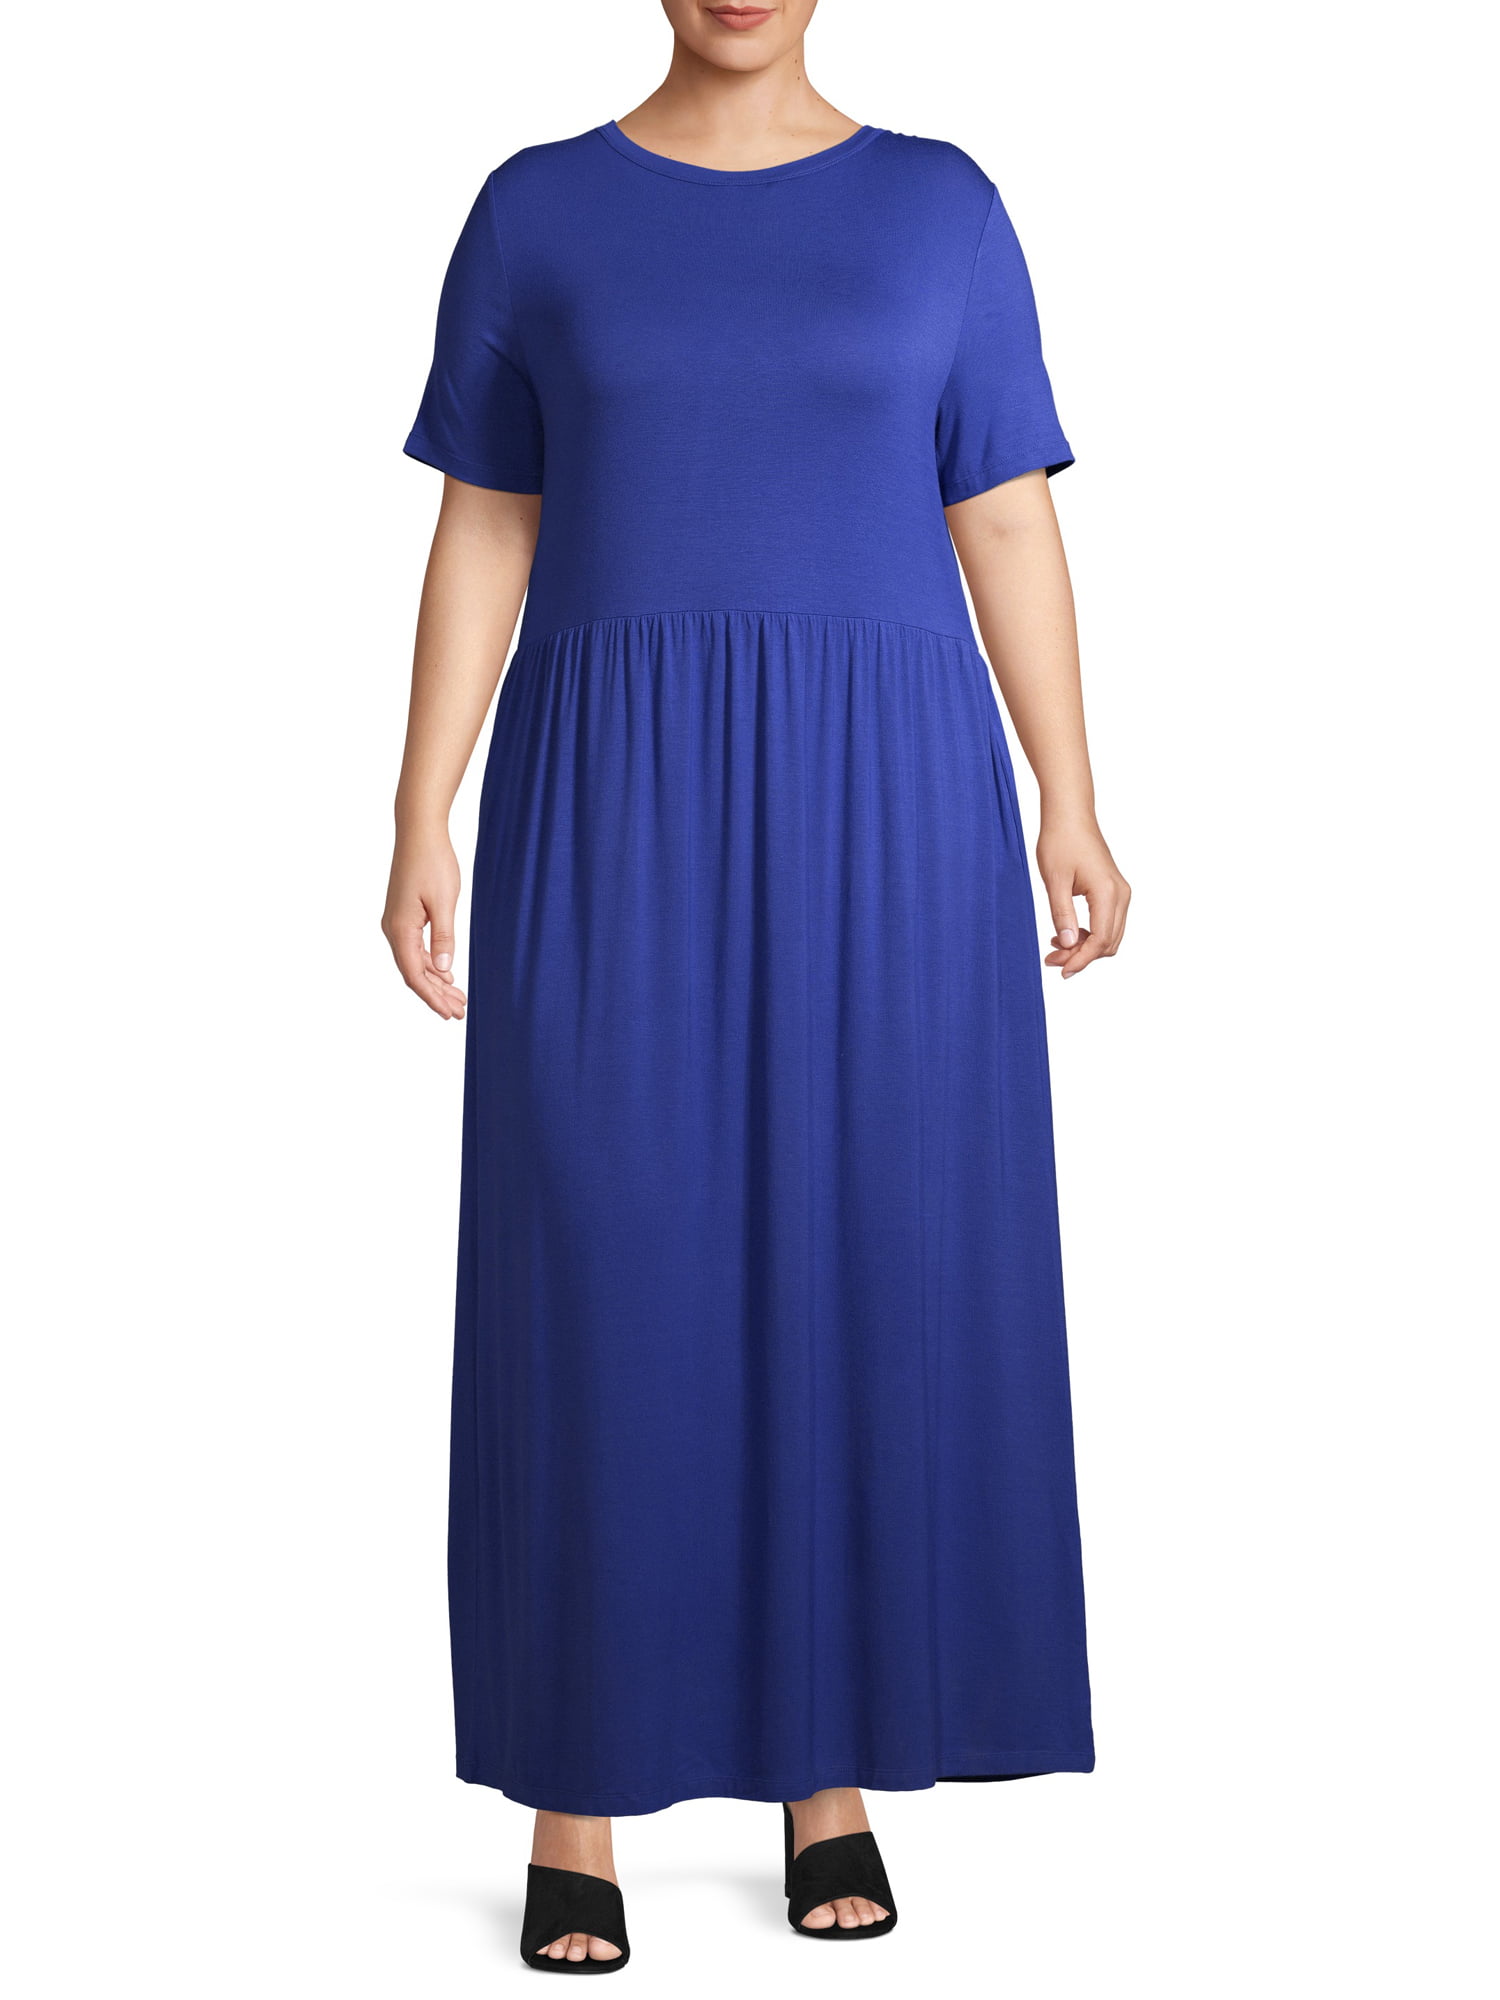 Terra & Sky Women's Plus Size Maxi Dress with Pockets - Walmart.com